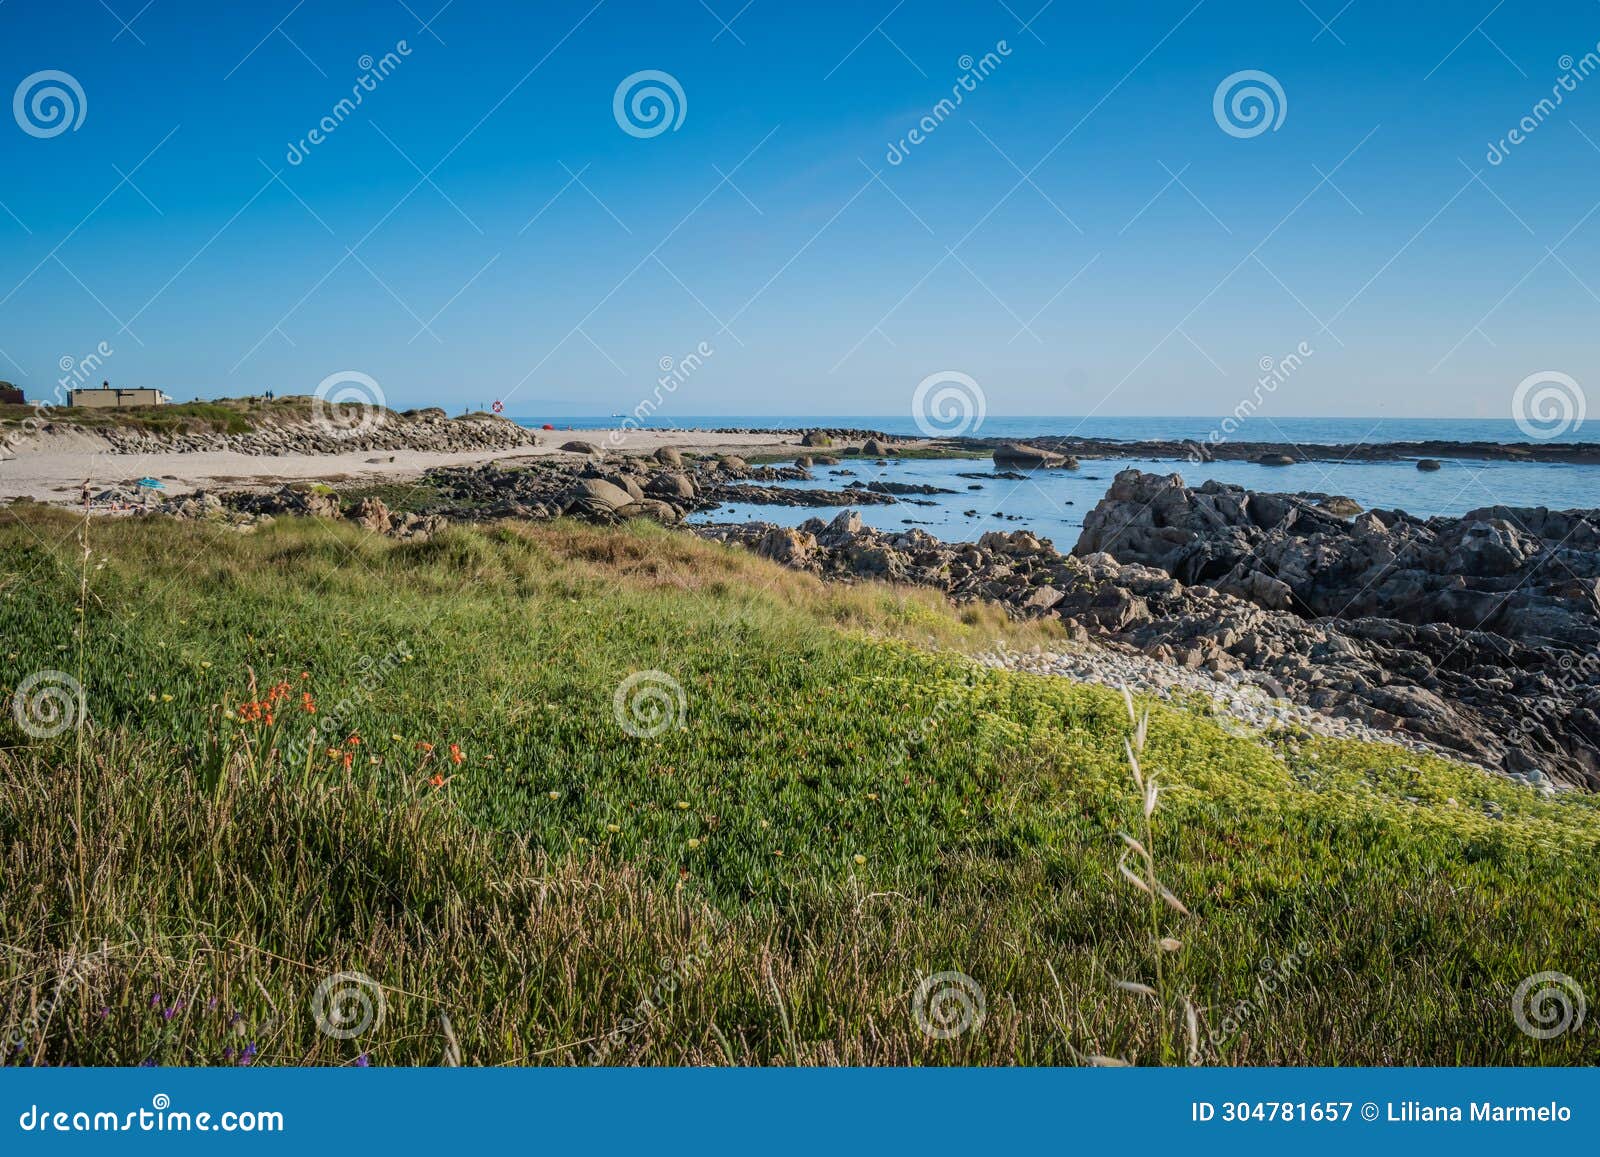 maritime vegetation, sand and rocks on carreÃ§o beach, viana do castelo portugal